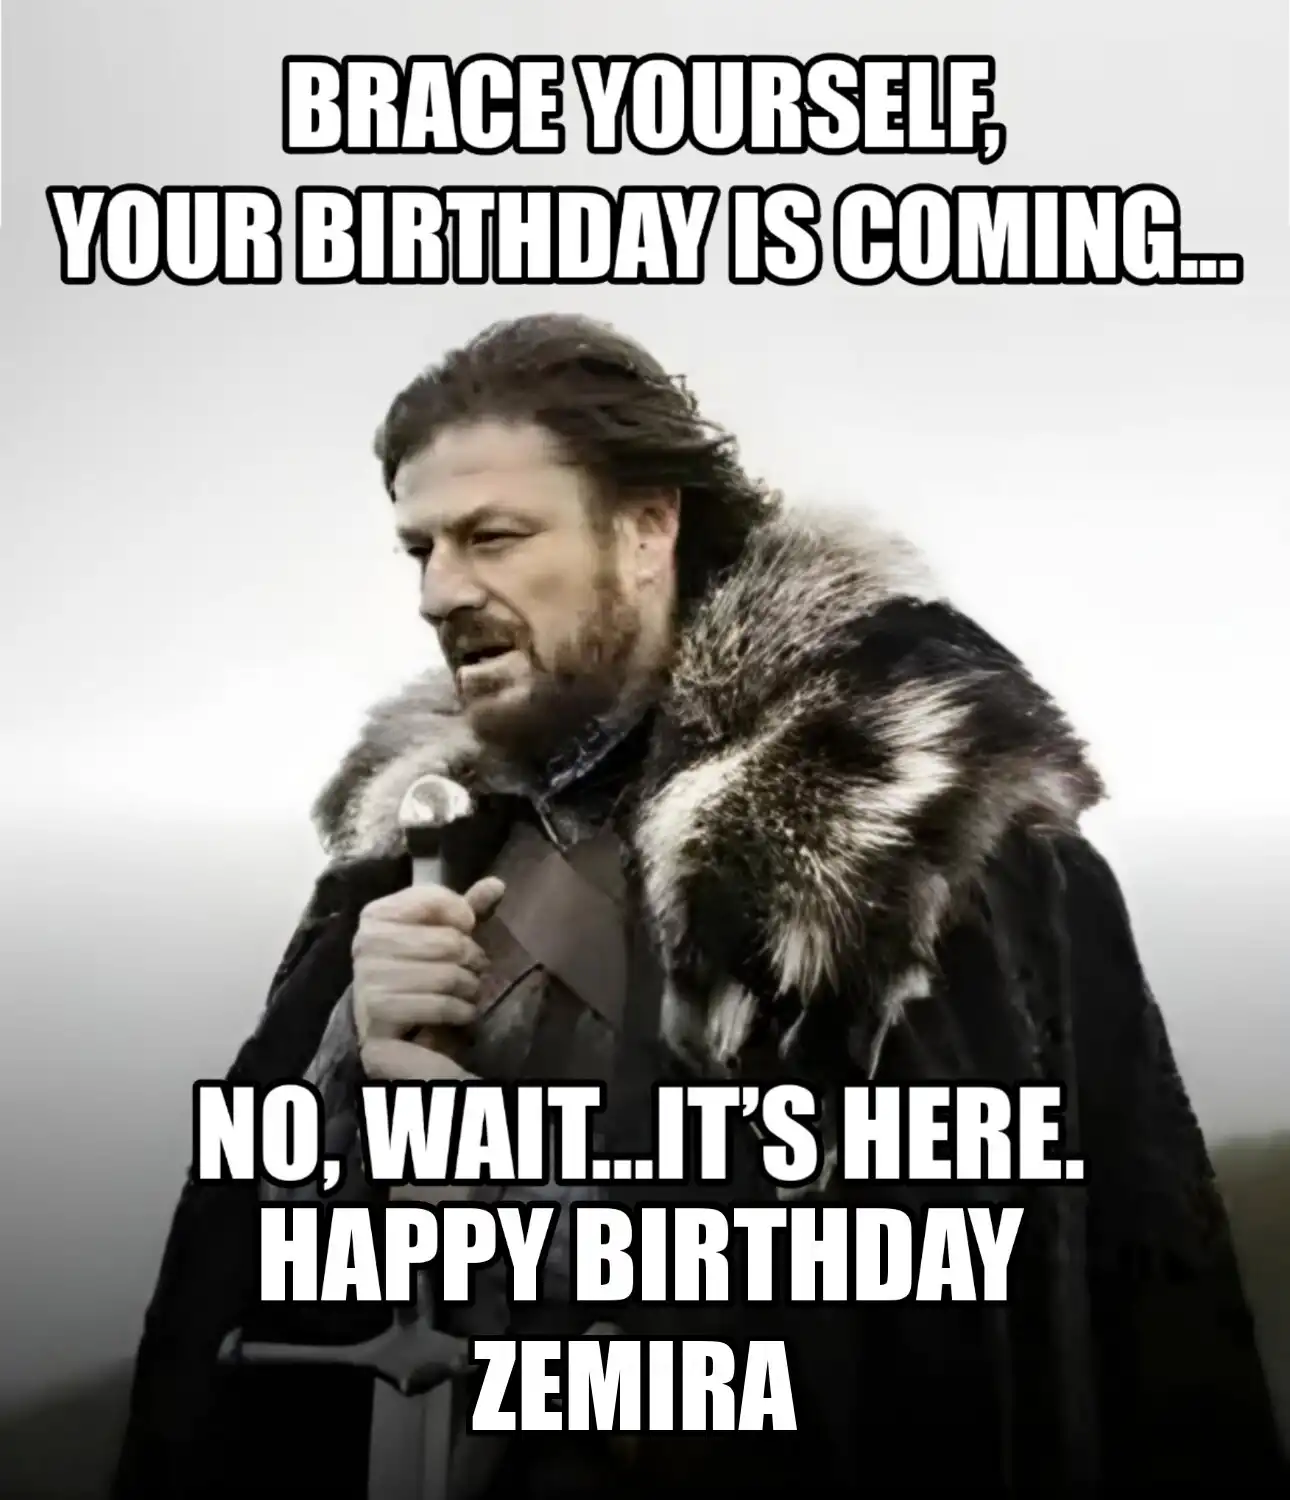 Happy Birthday Zemira Brace Yourself Your Birthday Is Coming Meme